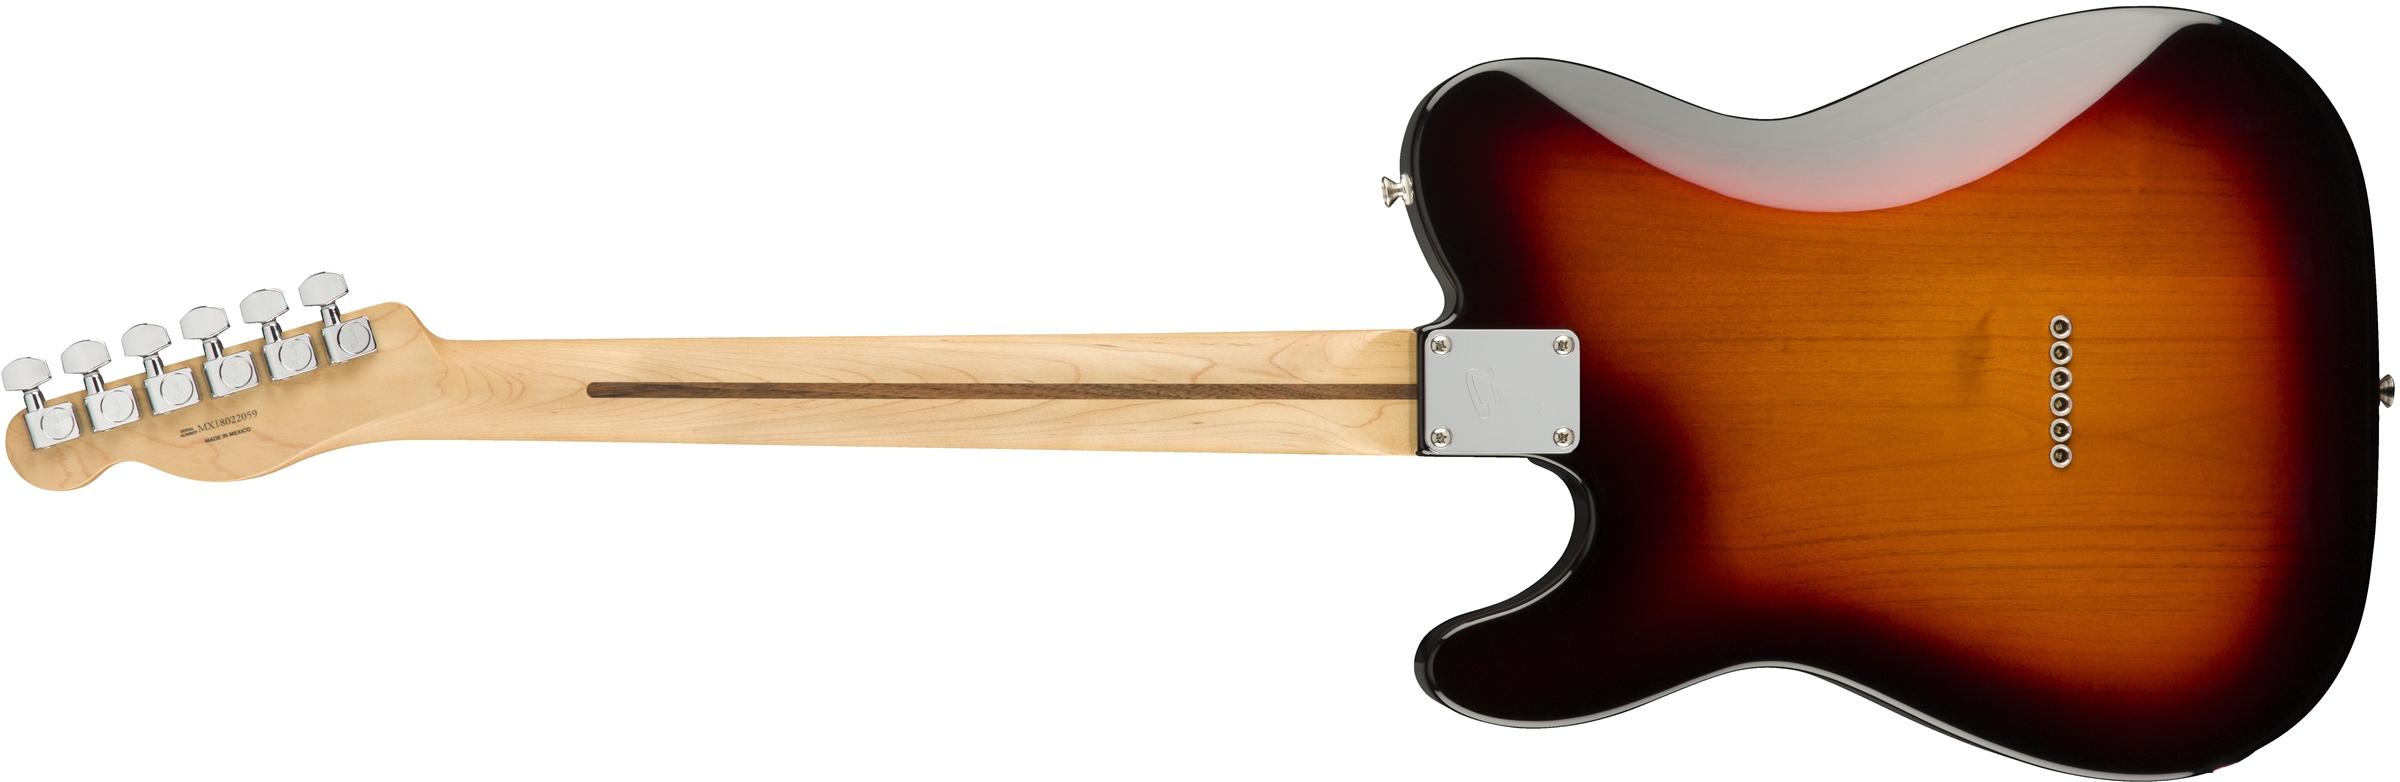 Fender Tele Player Mex Hh Pf - 3-color Sunburst - E-Gitarre in Teleform - Variation 1